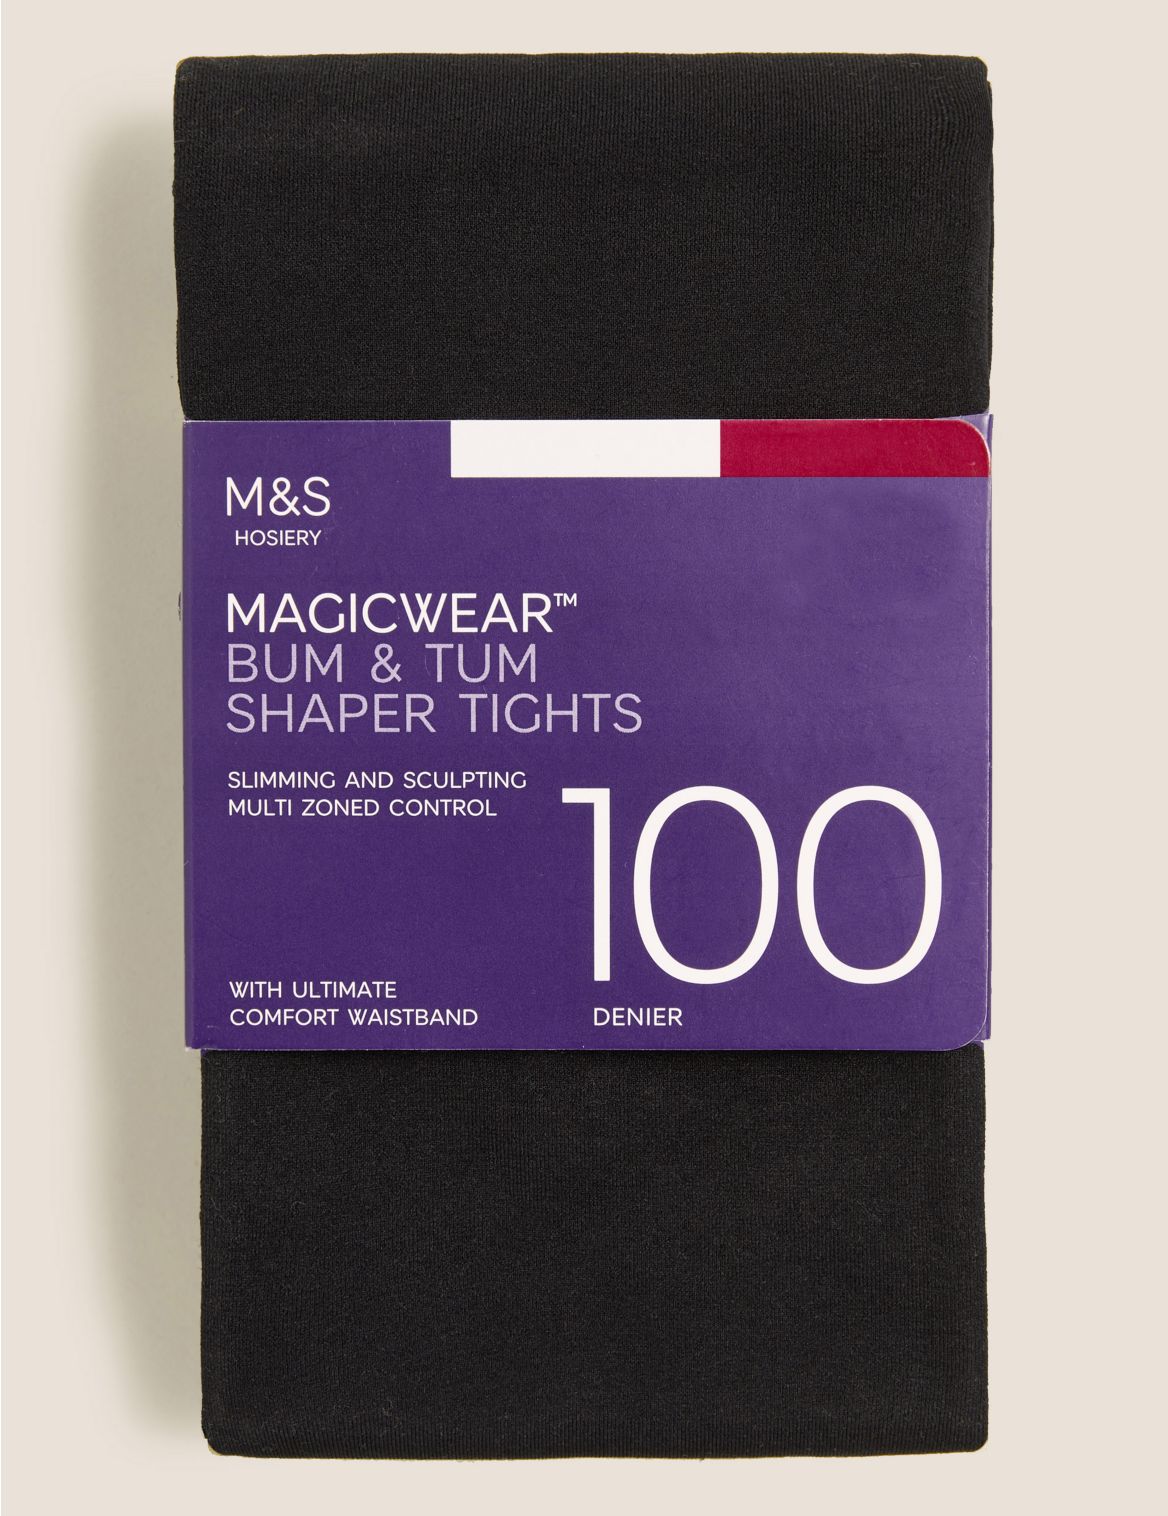 100 Denier Magicwear&trade; Shaper Tights black